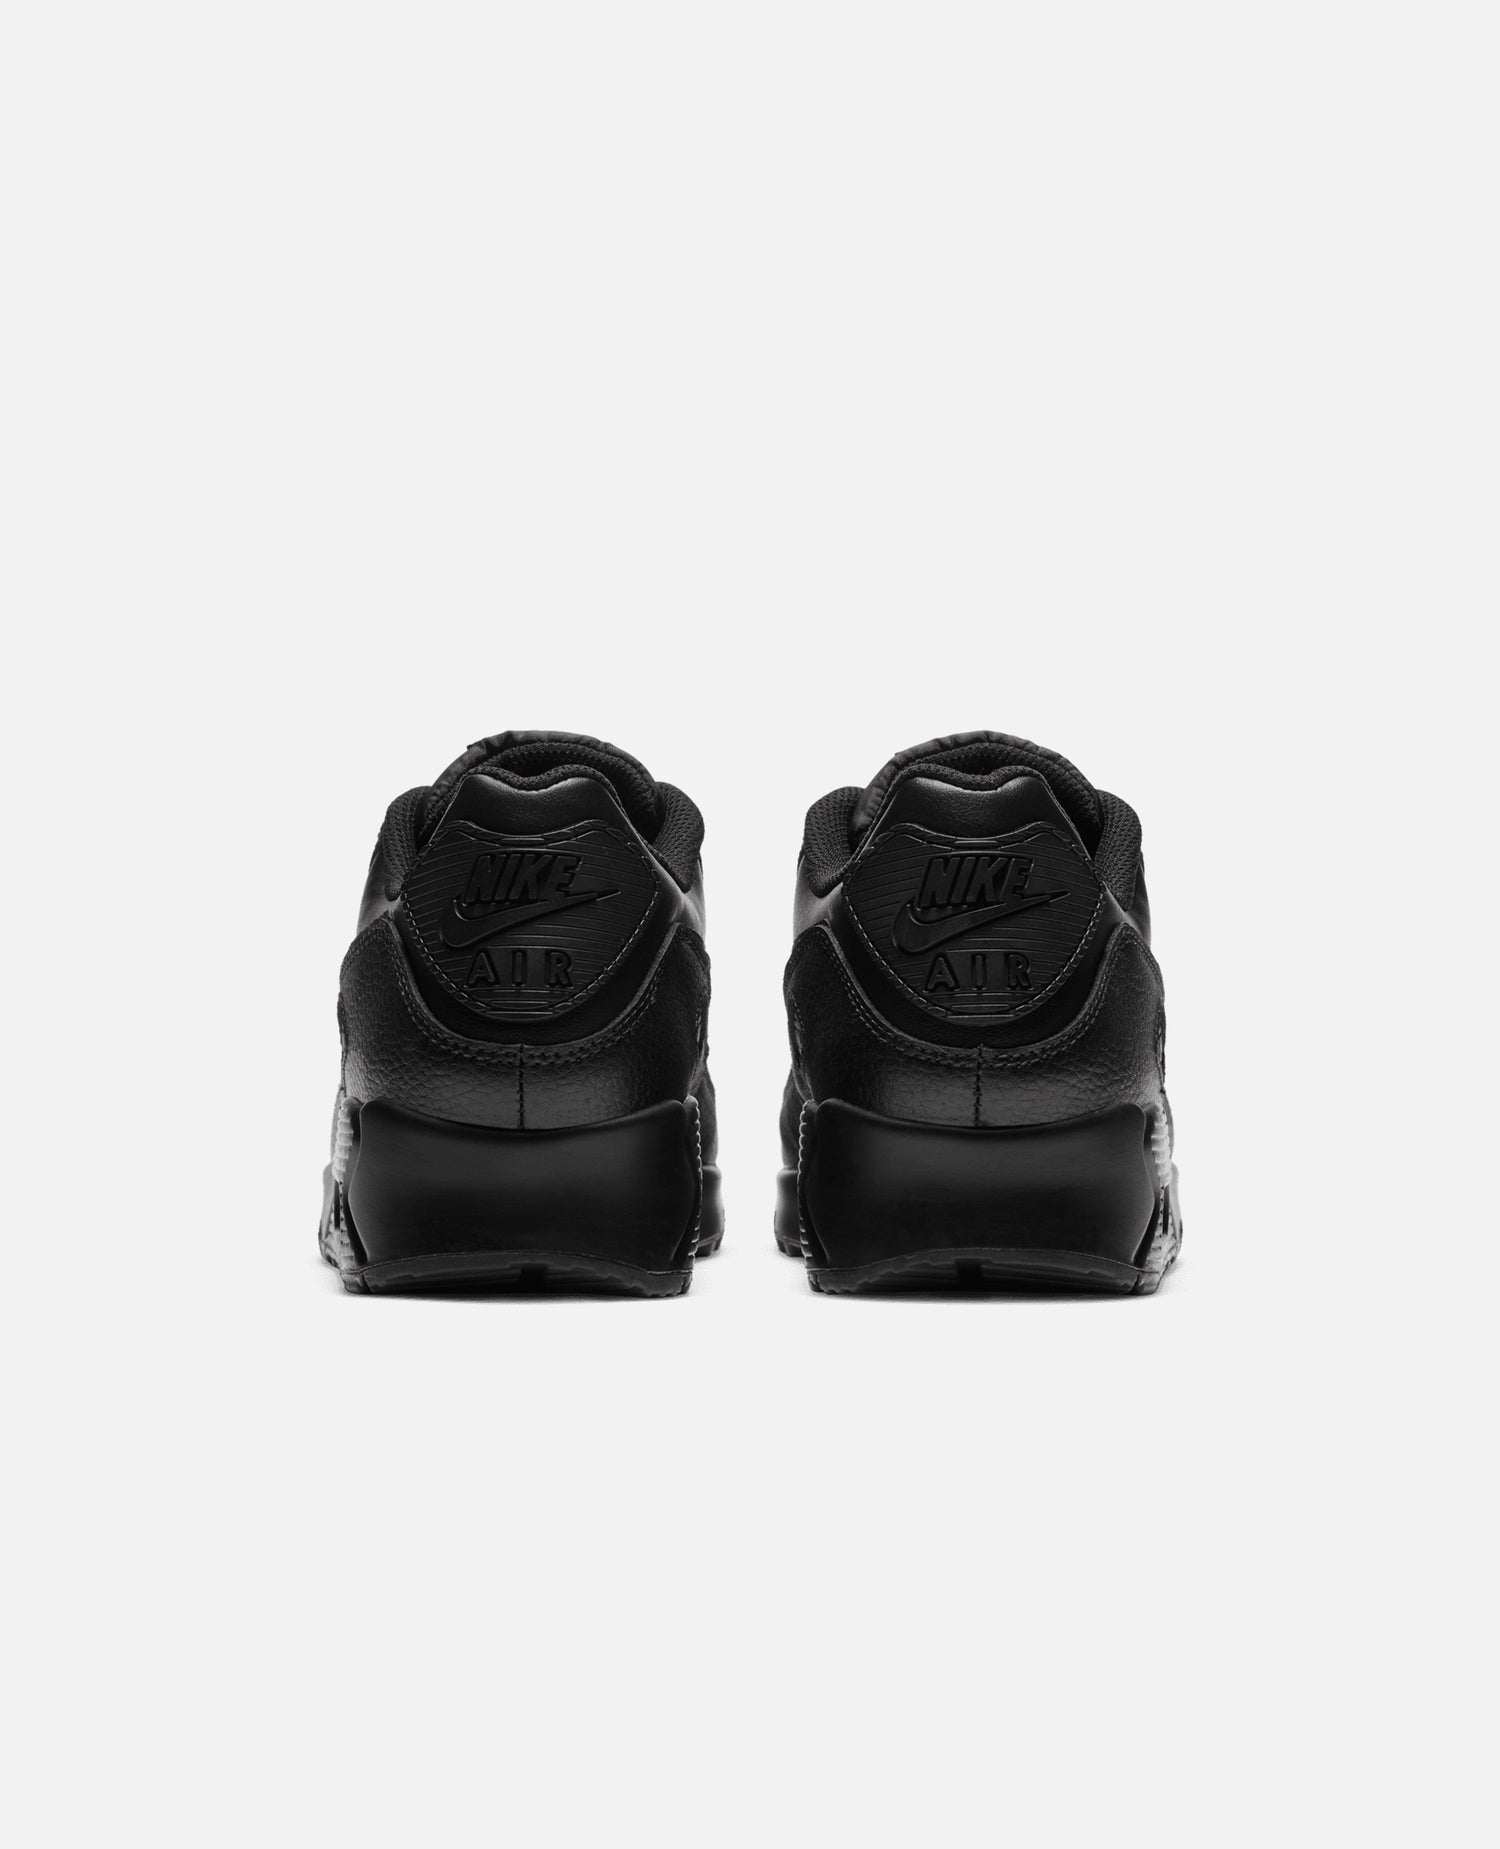 Nike Air Max 90 Ltr (Black/Black-Black)